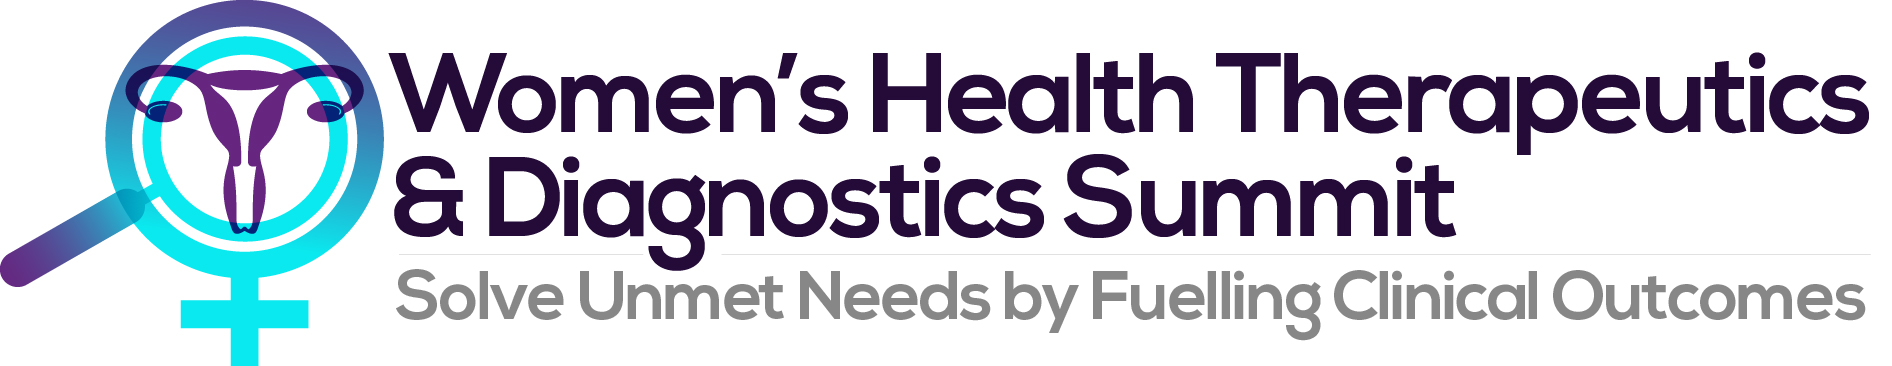 HW240227 48887 – Women’s Health Therapeutics &amp; Diagnostics Summit logo FINAL TAG